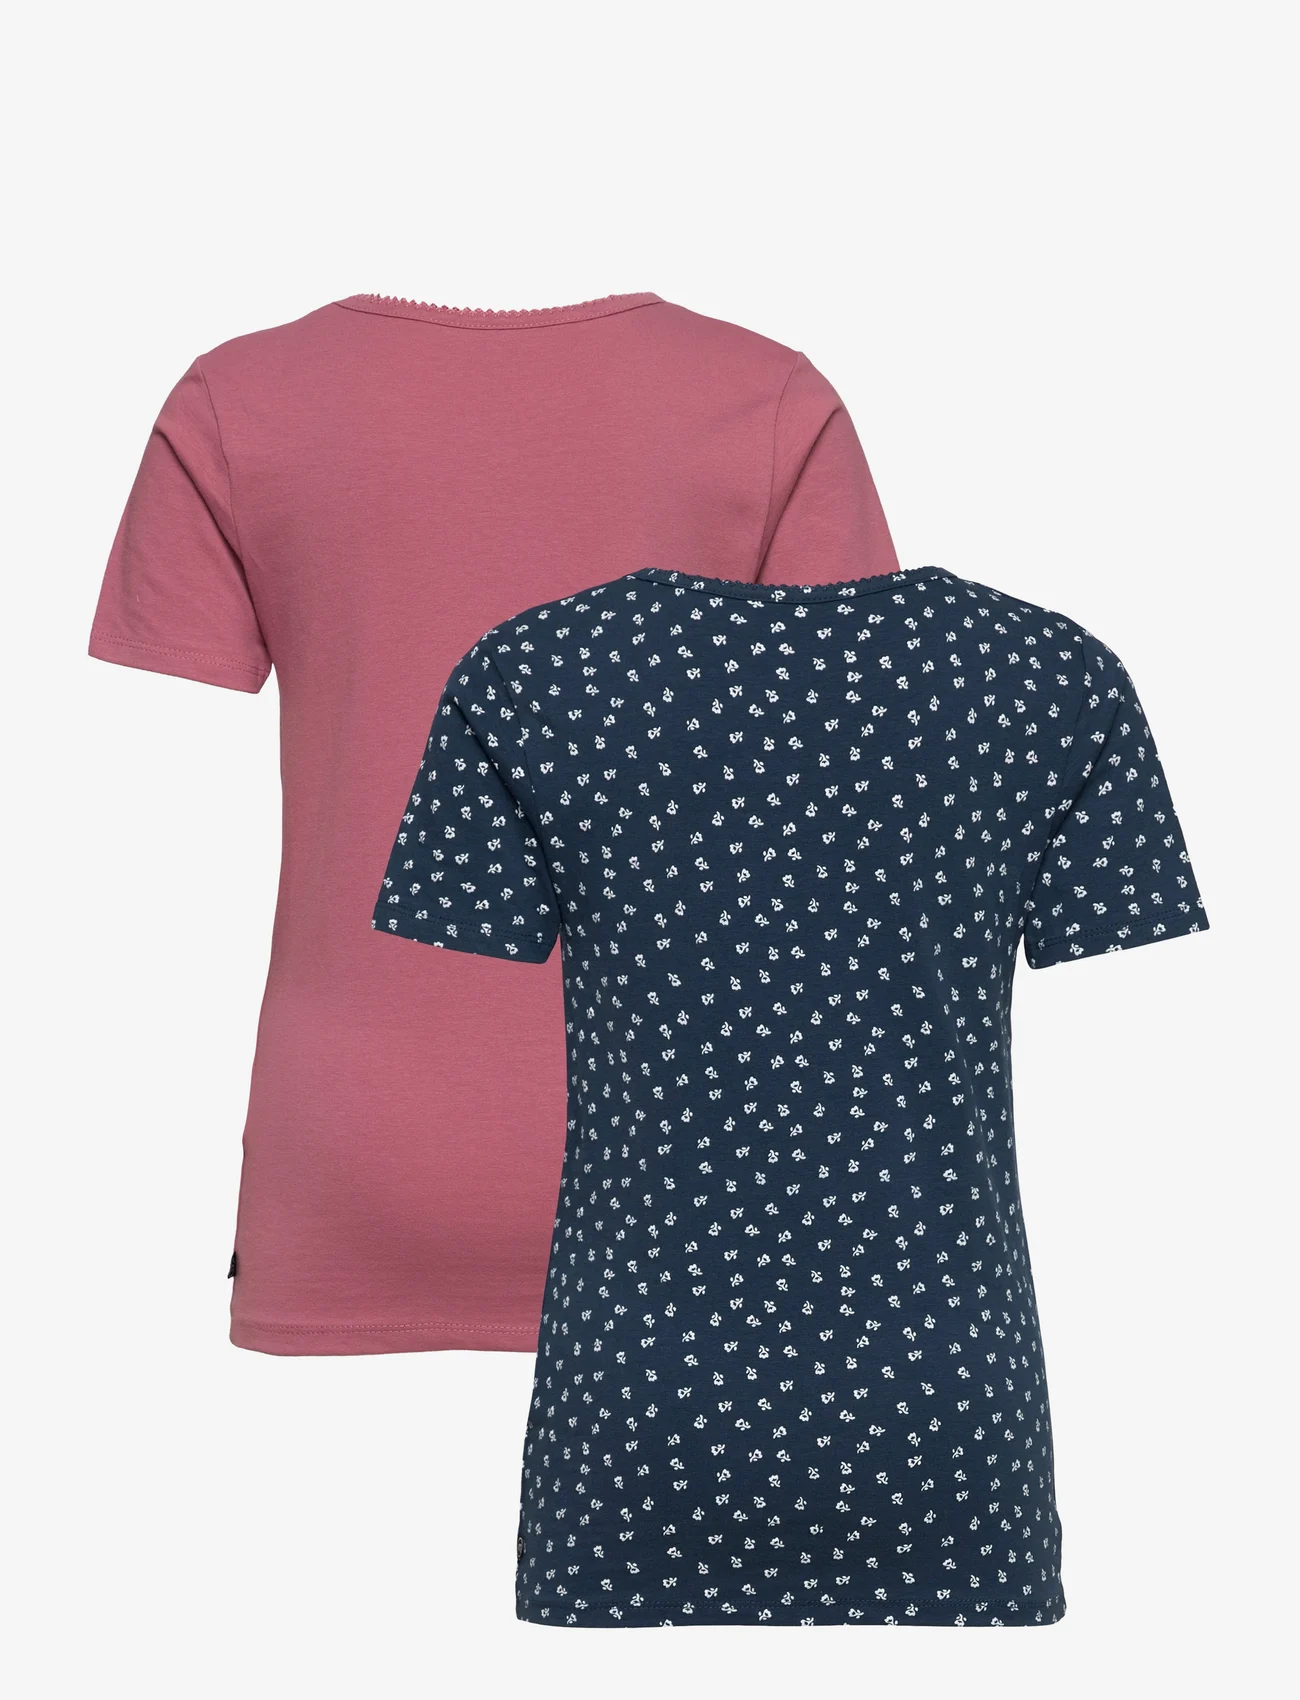 Minymo - Basic 33 -T-shirt SS (2-pack) - kortærmede t-shirts - mesa rose - 1